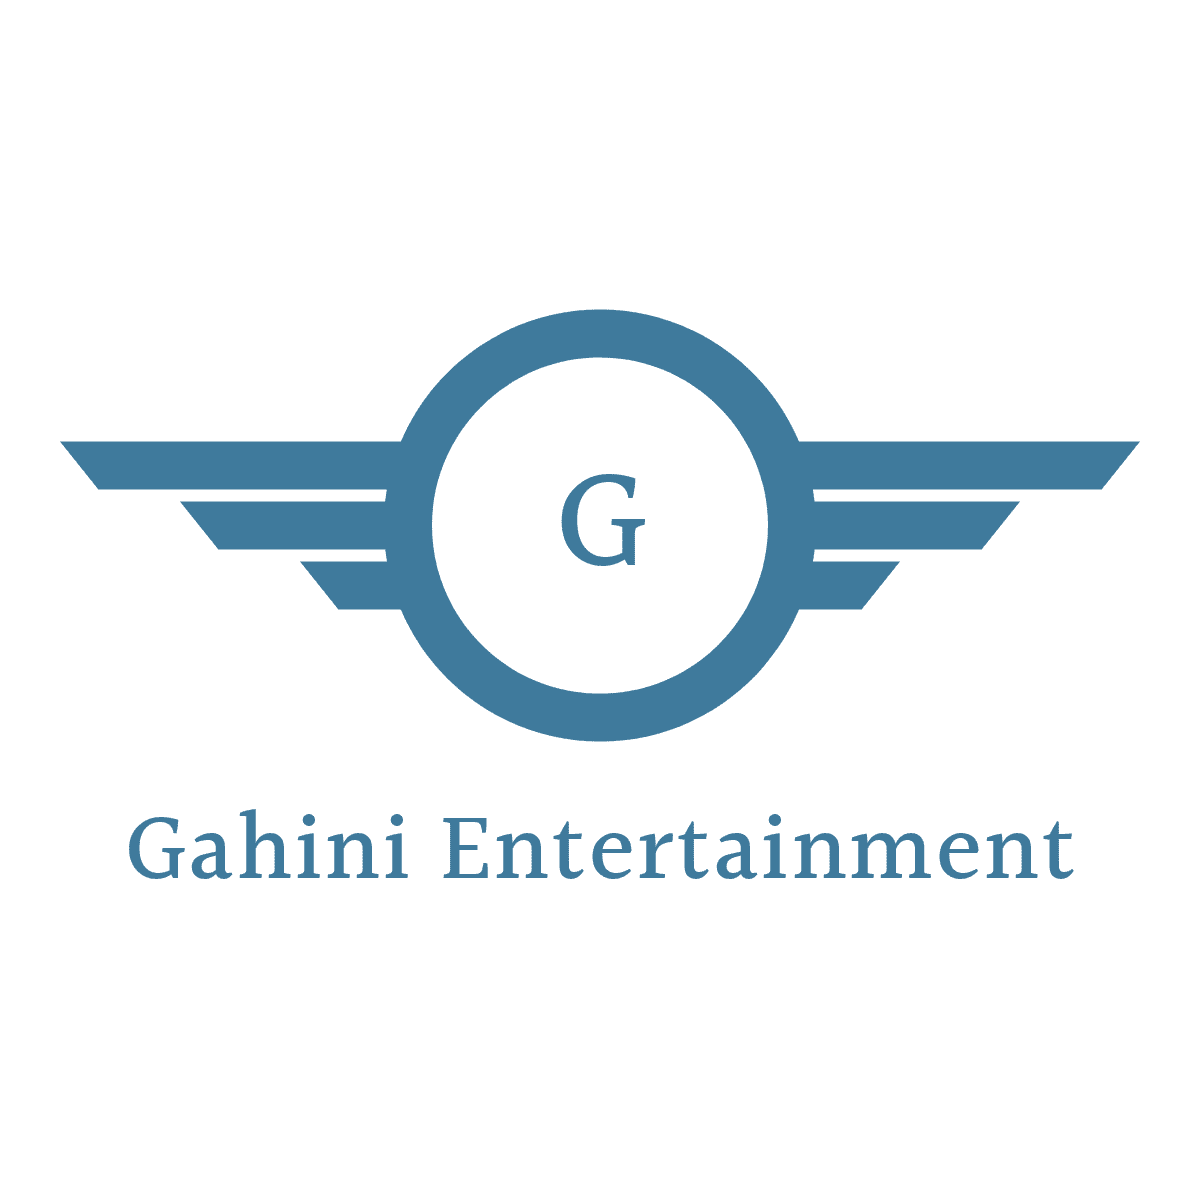 Gahini Entertainment